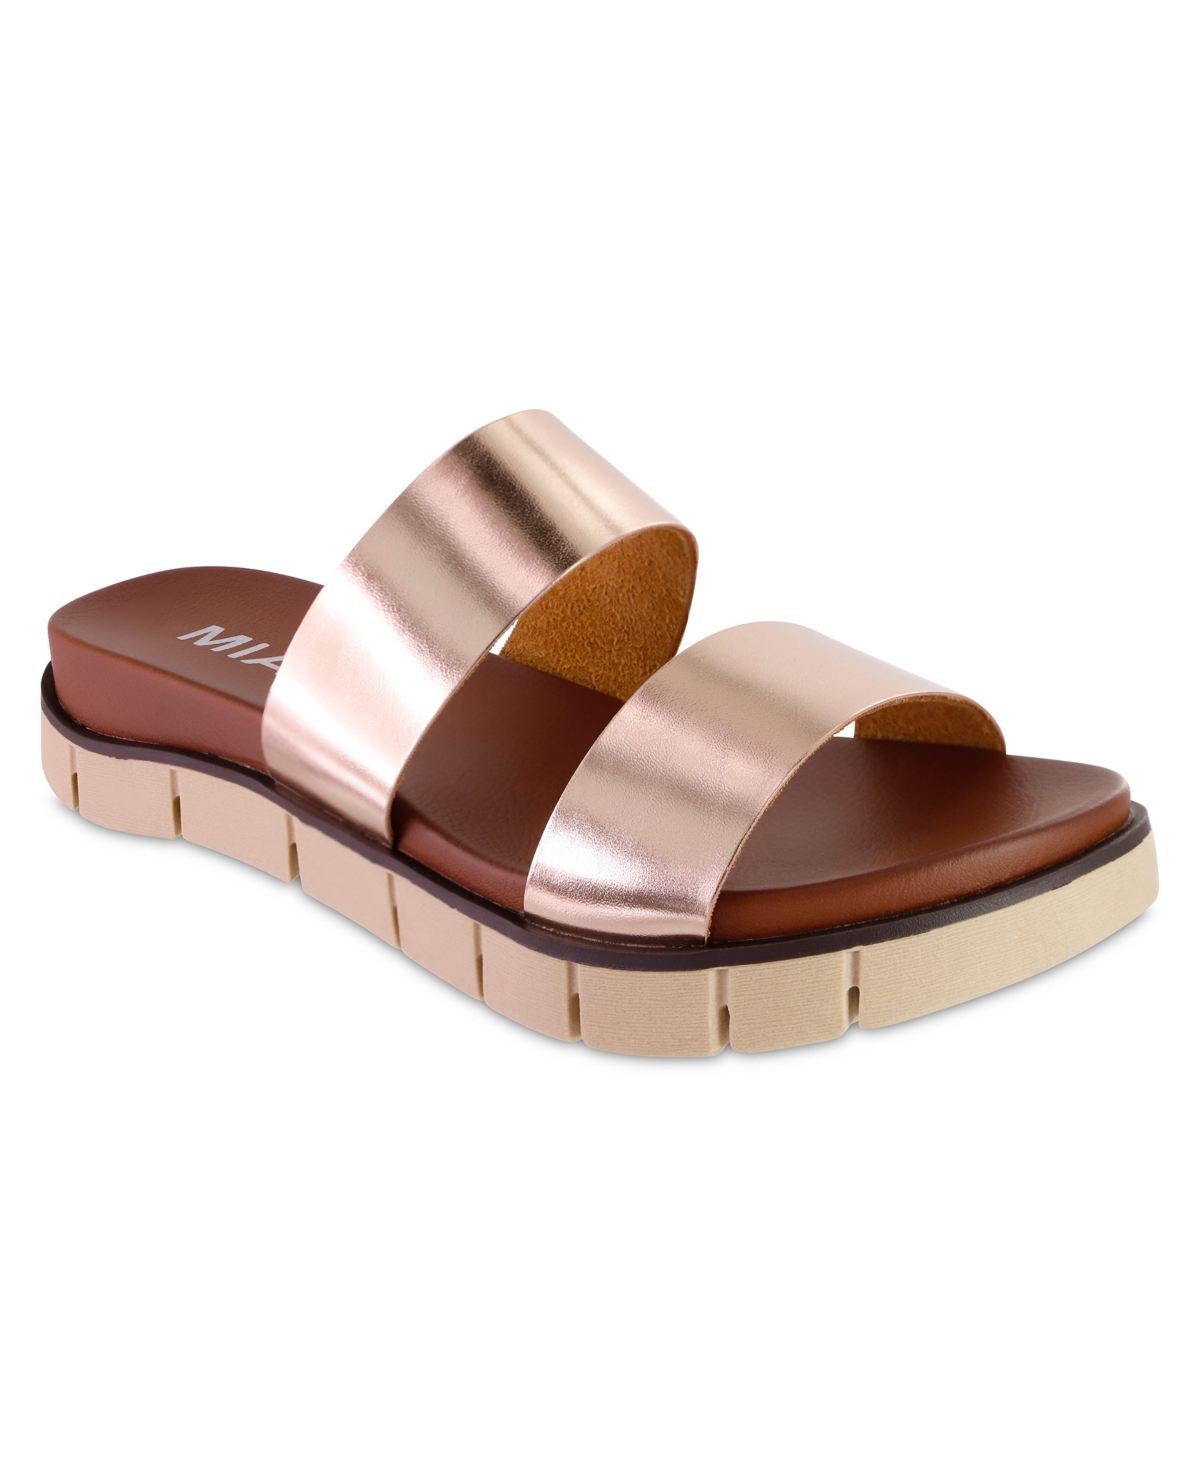 Women's Elori Slip-On Sandals - Rose Gold Leather